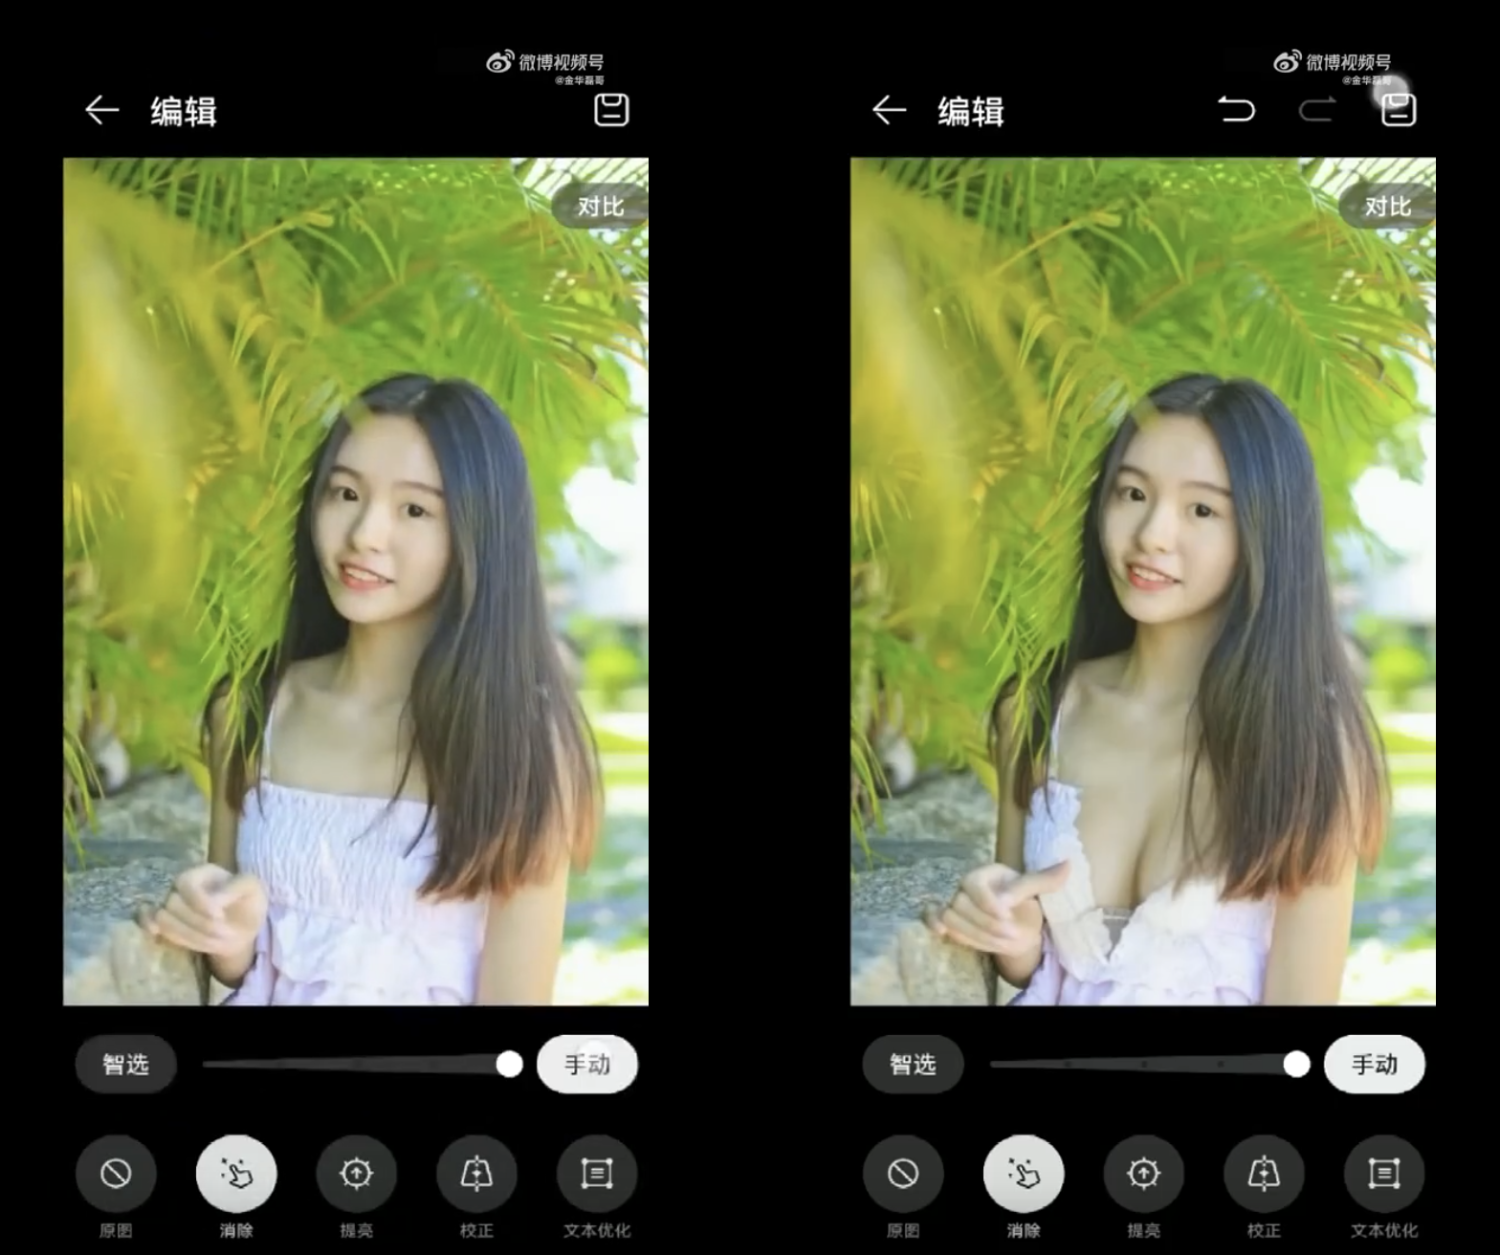 В смартфоне Huawei Pura 70 нашли неанонсированную функцию раздевания людей на фото1